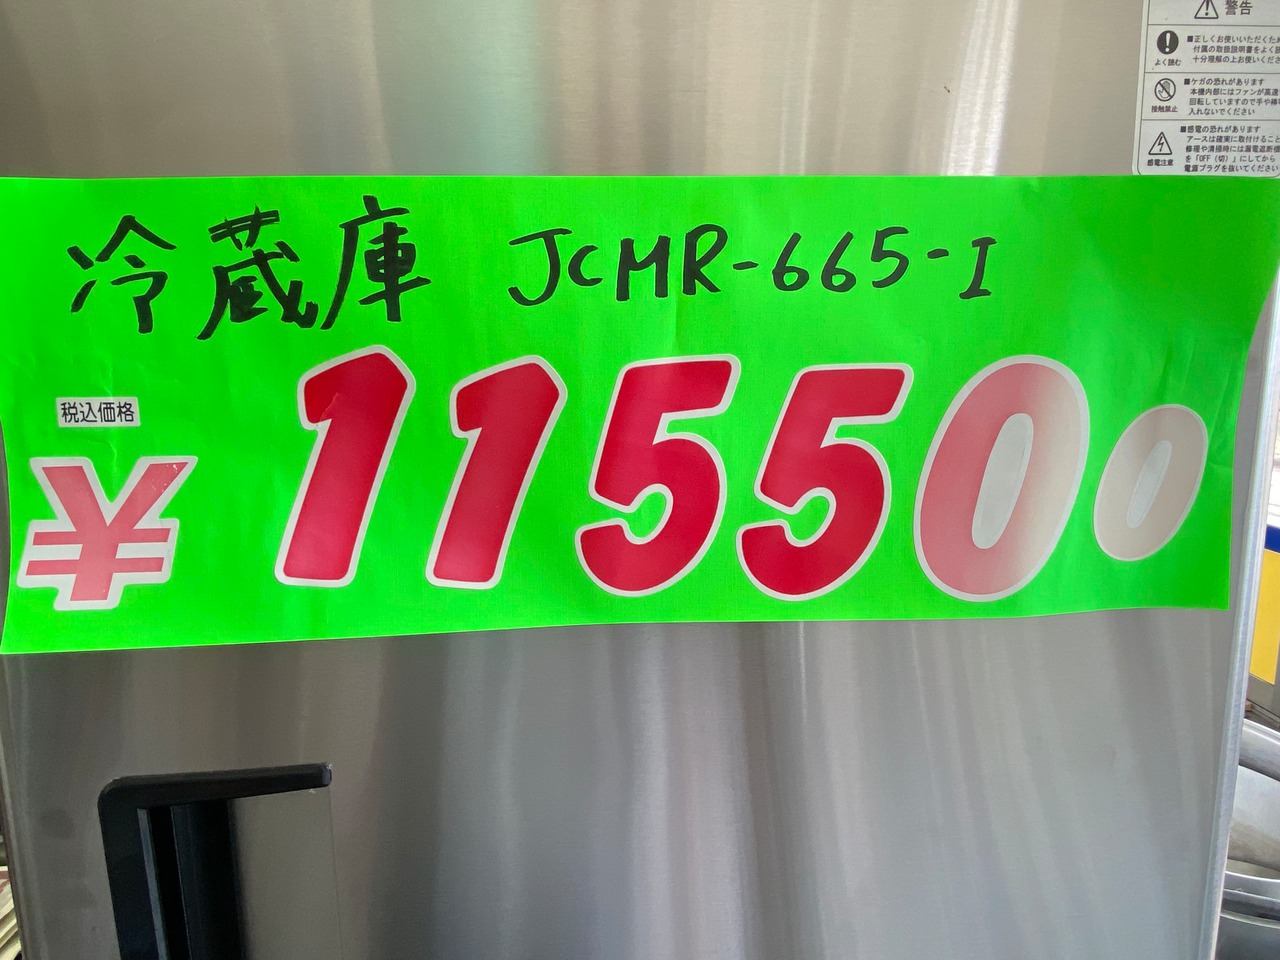 JCM 　業務用冷蔵庫　JCMR-665-I